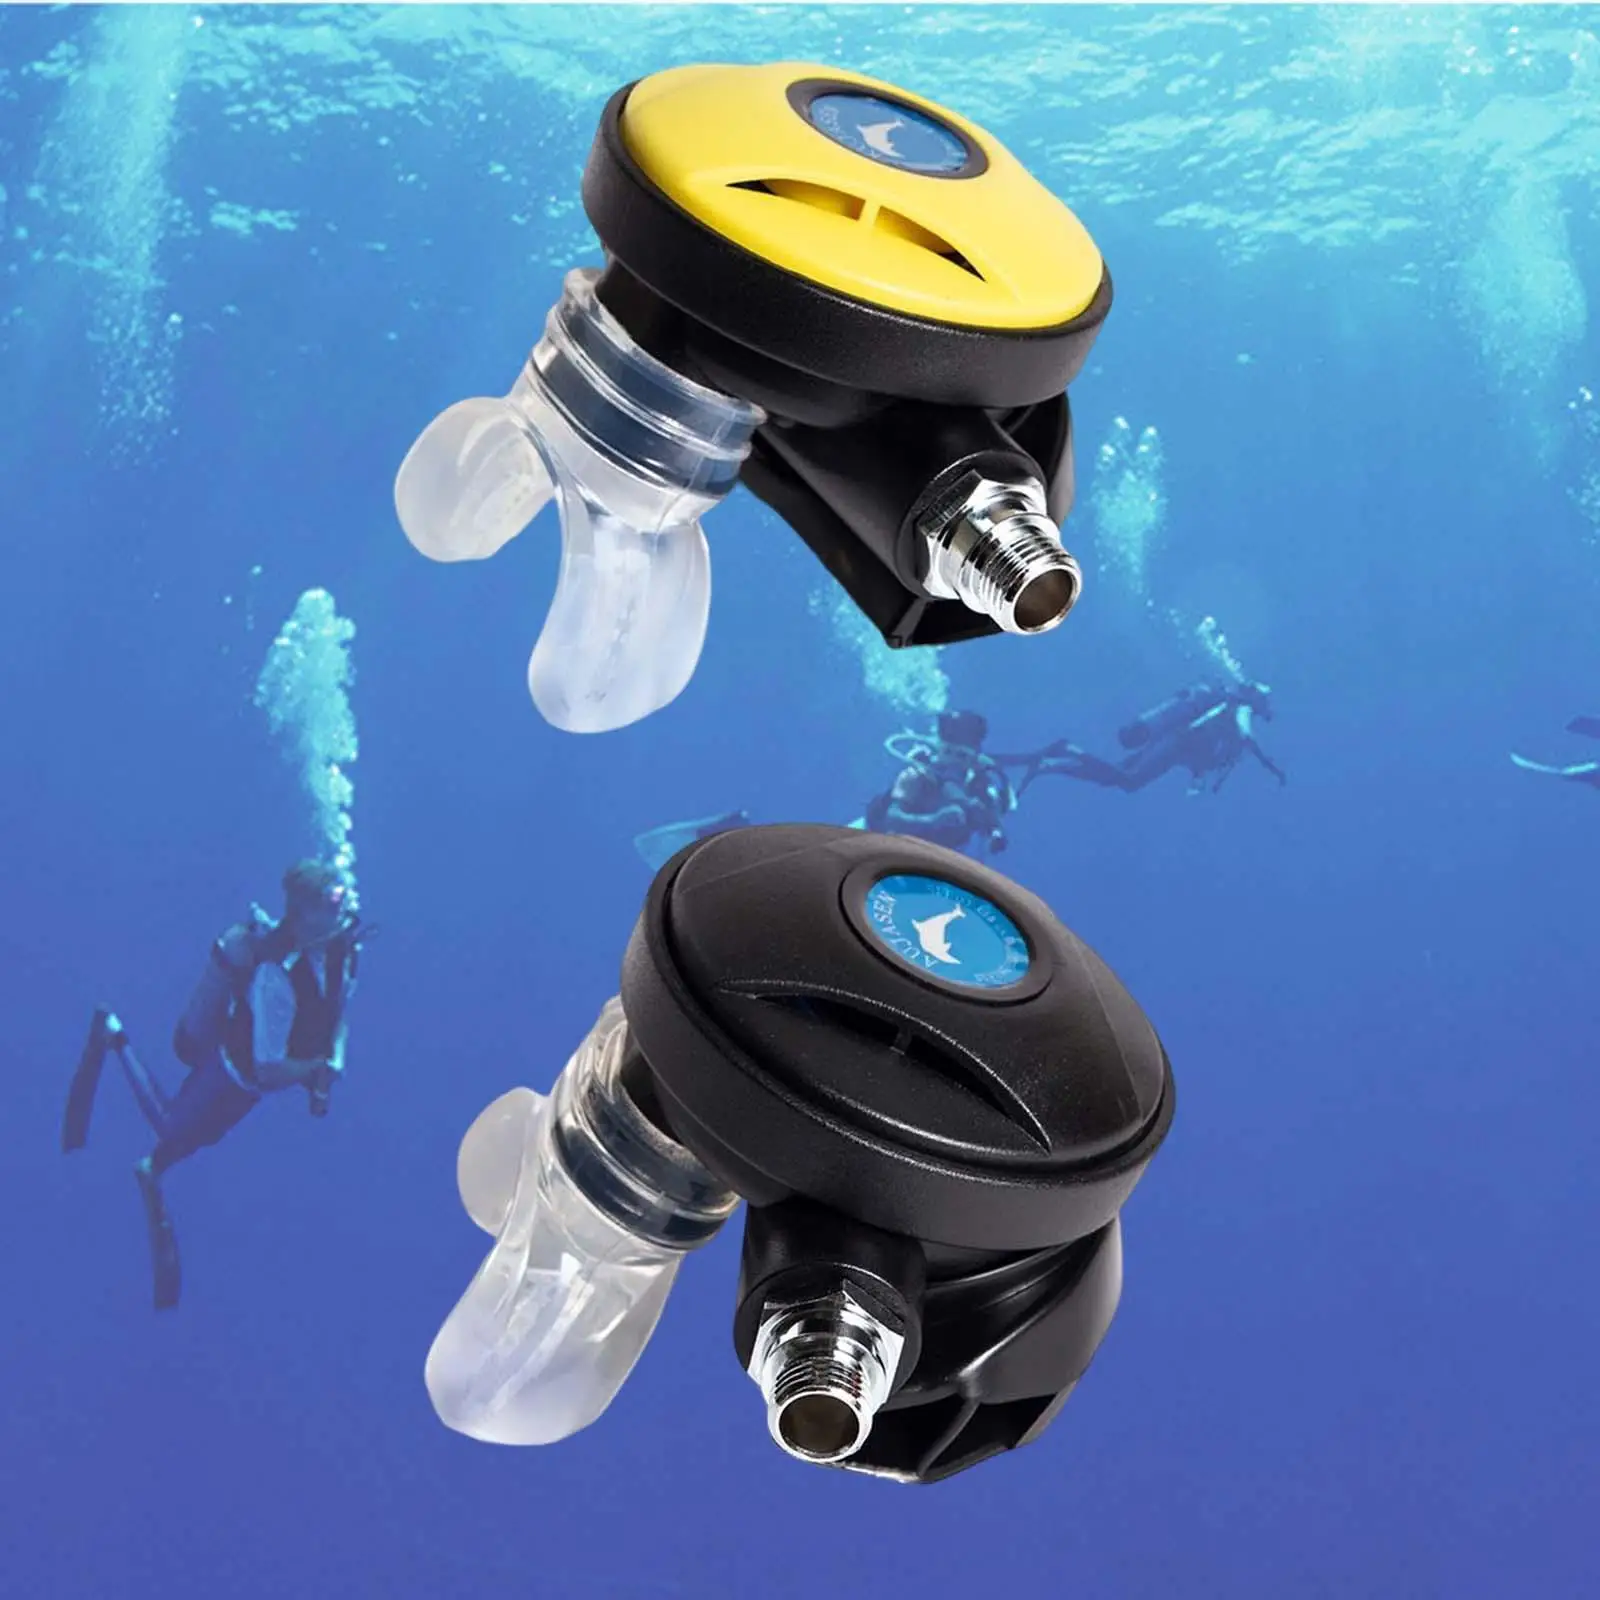 Scuba Diving 2nd Stage Regulator Professional Underwater Scuba Dive Octopus Regulator Equipment Accessory